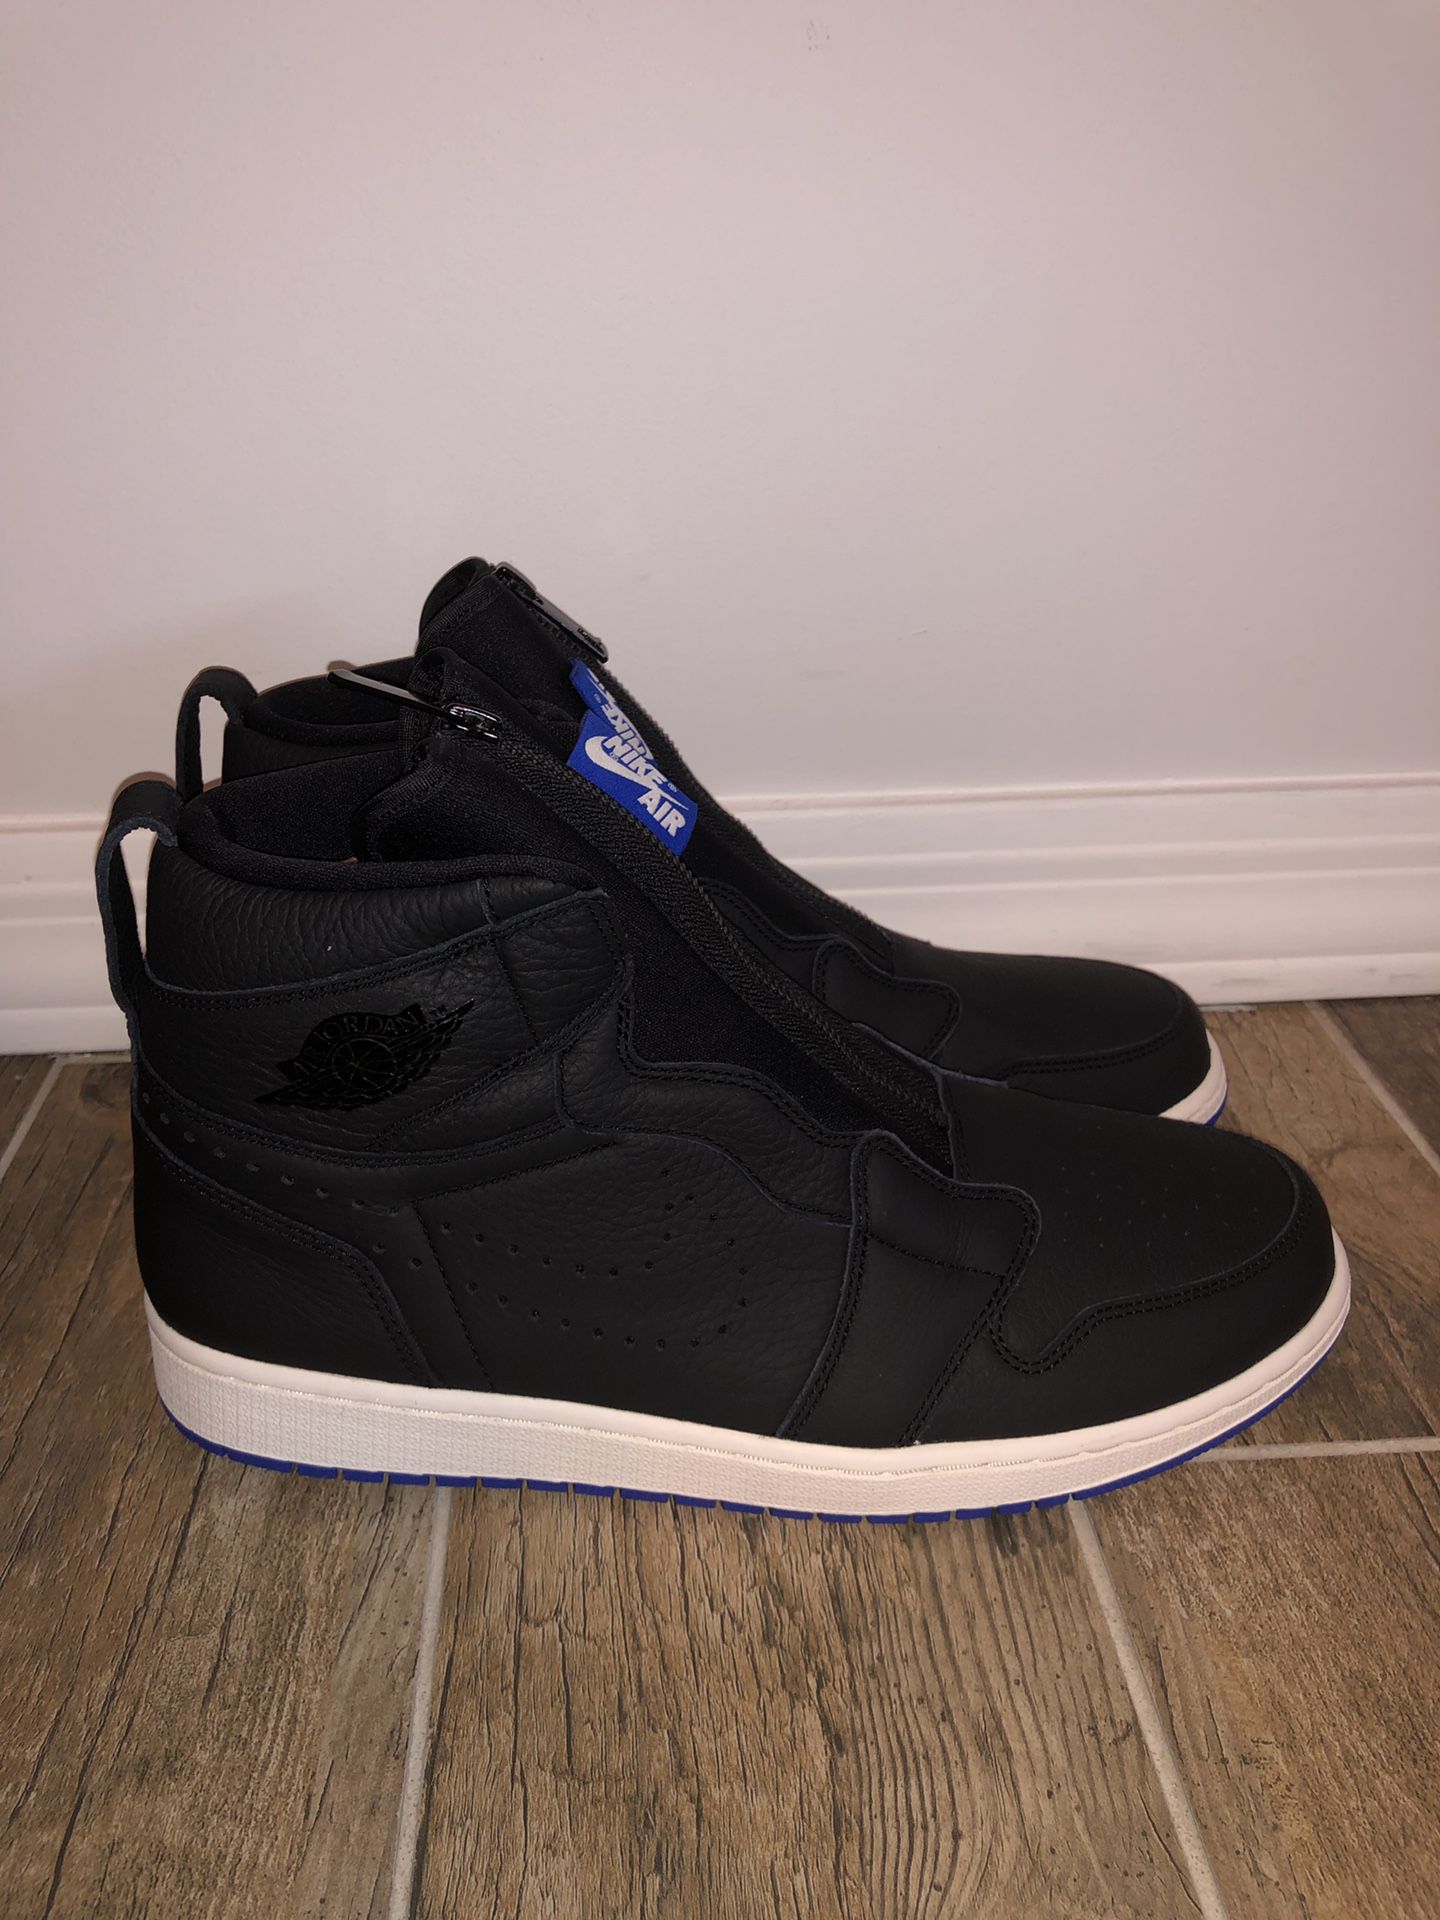 Air Jordan 1 High Zip men’s basketball shoes size 12